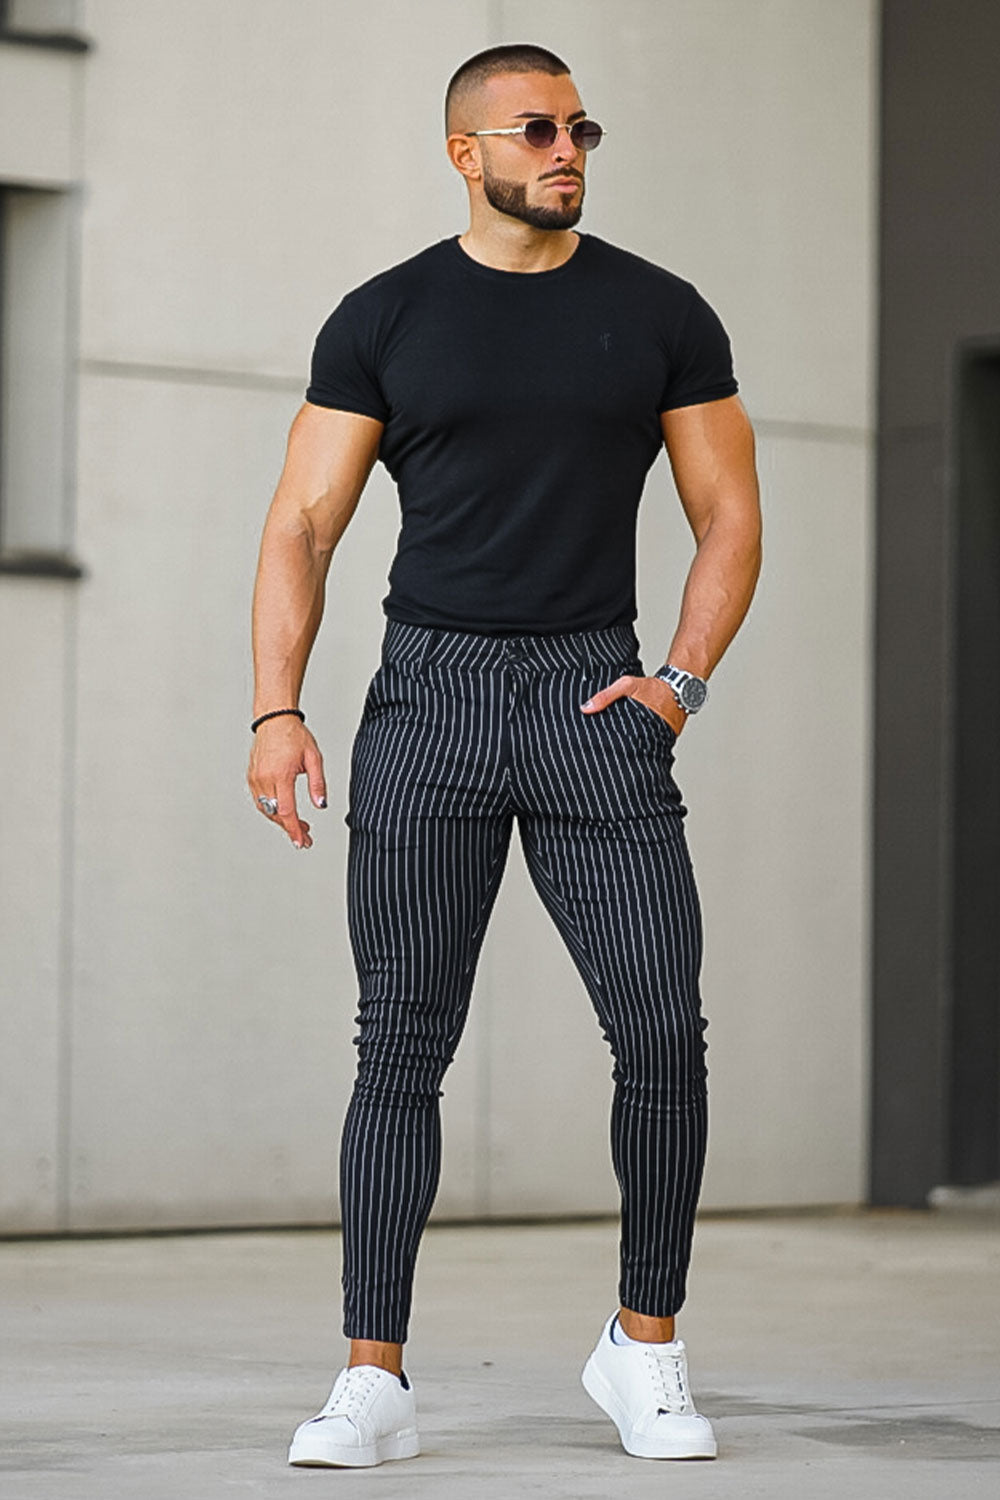 men's casual chinos pants